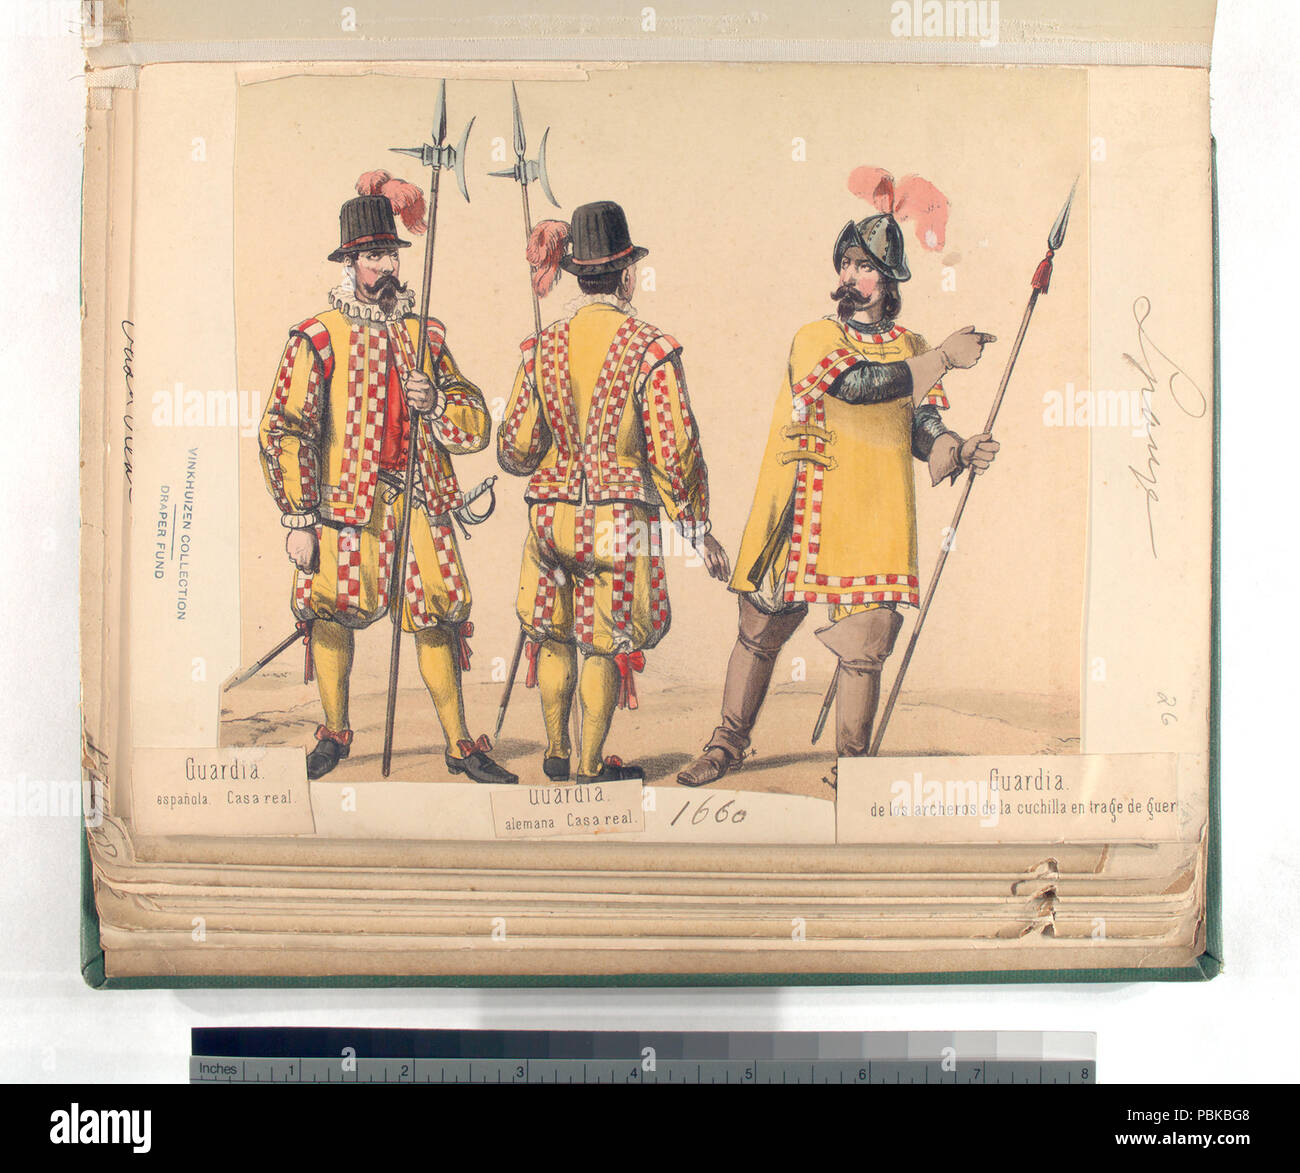 734 Guardia española, Casa real; Guardia alemana Casa real; Guardia de los archeros de la cuchilla en traje de guerra. 1660 (NYPL b14896507-87486) Stock Photo